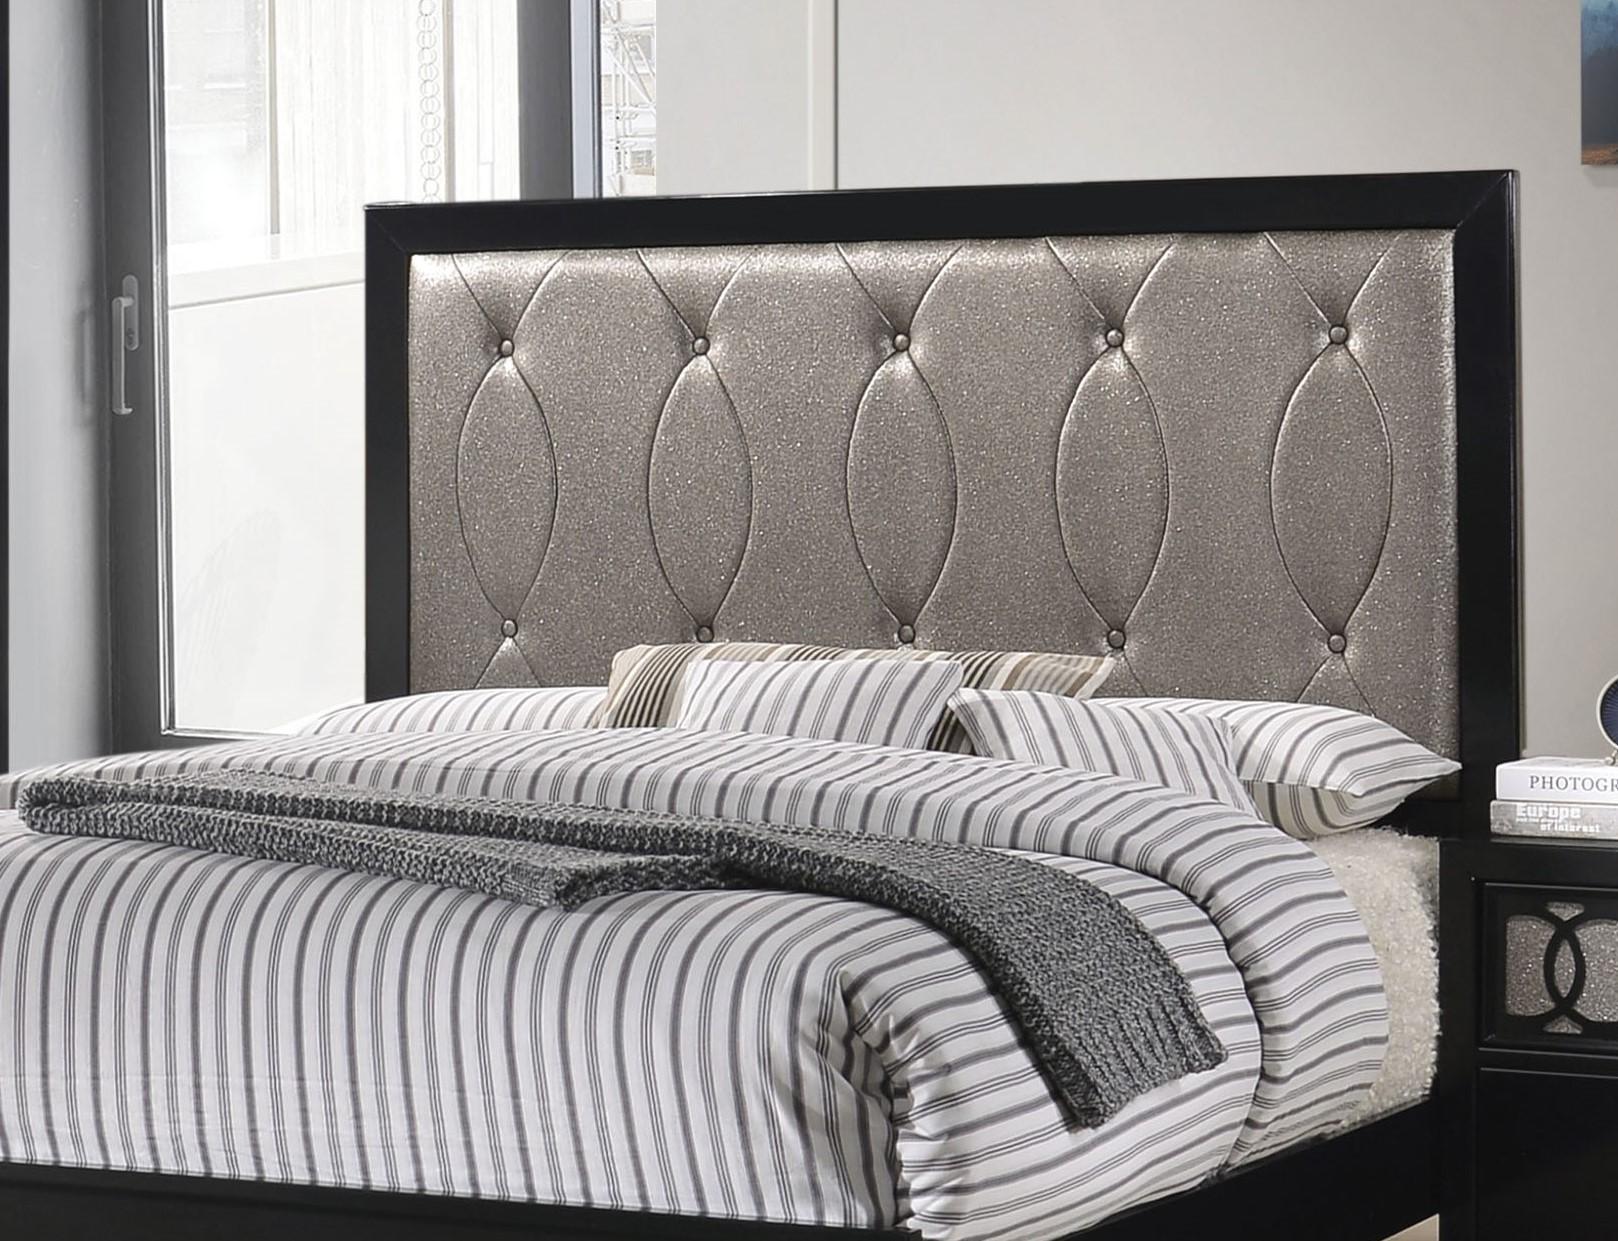 

    
Transitional Copper & Black Finish Glossy Upholstered Headboard King Bed Ulrik-27067EK Acme
